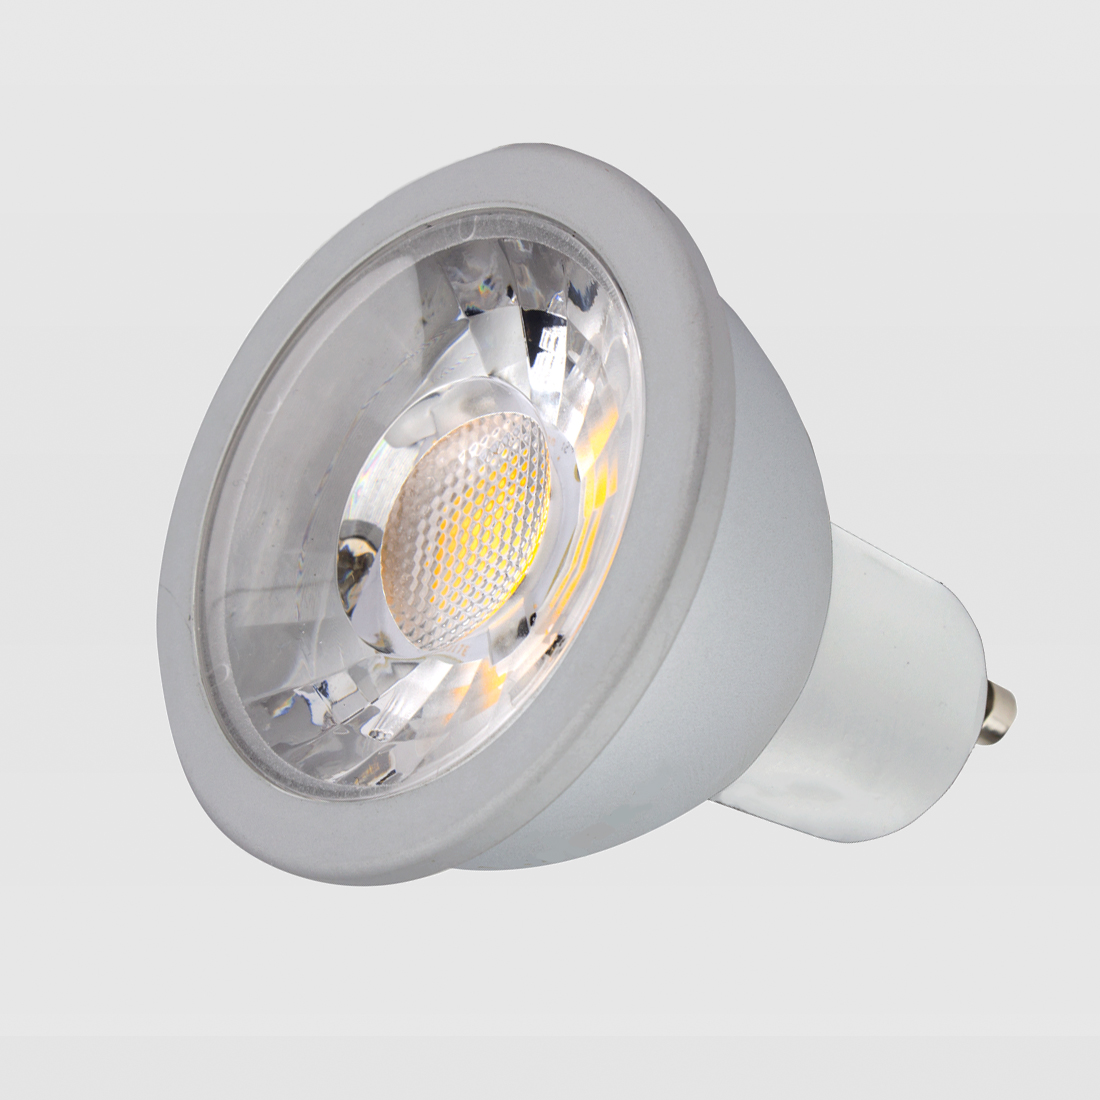 LED GU10 Lamp, Americas Best LED